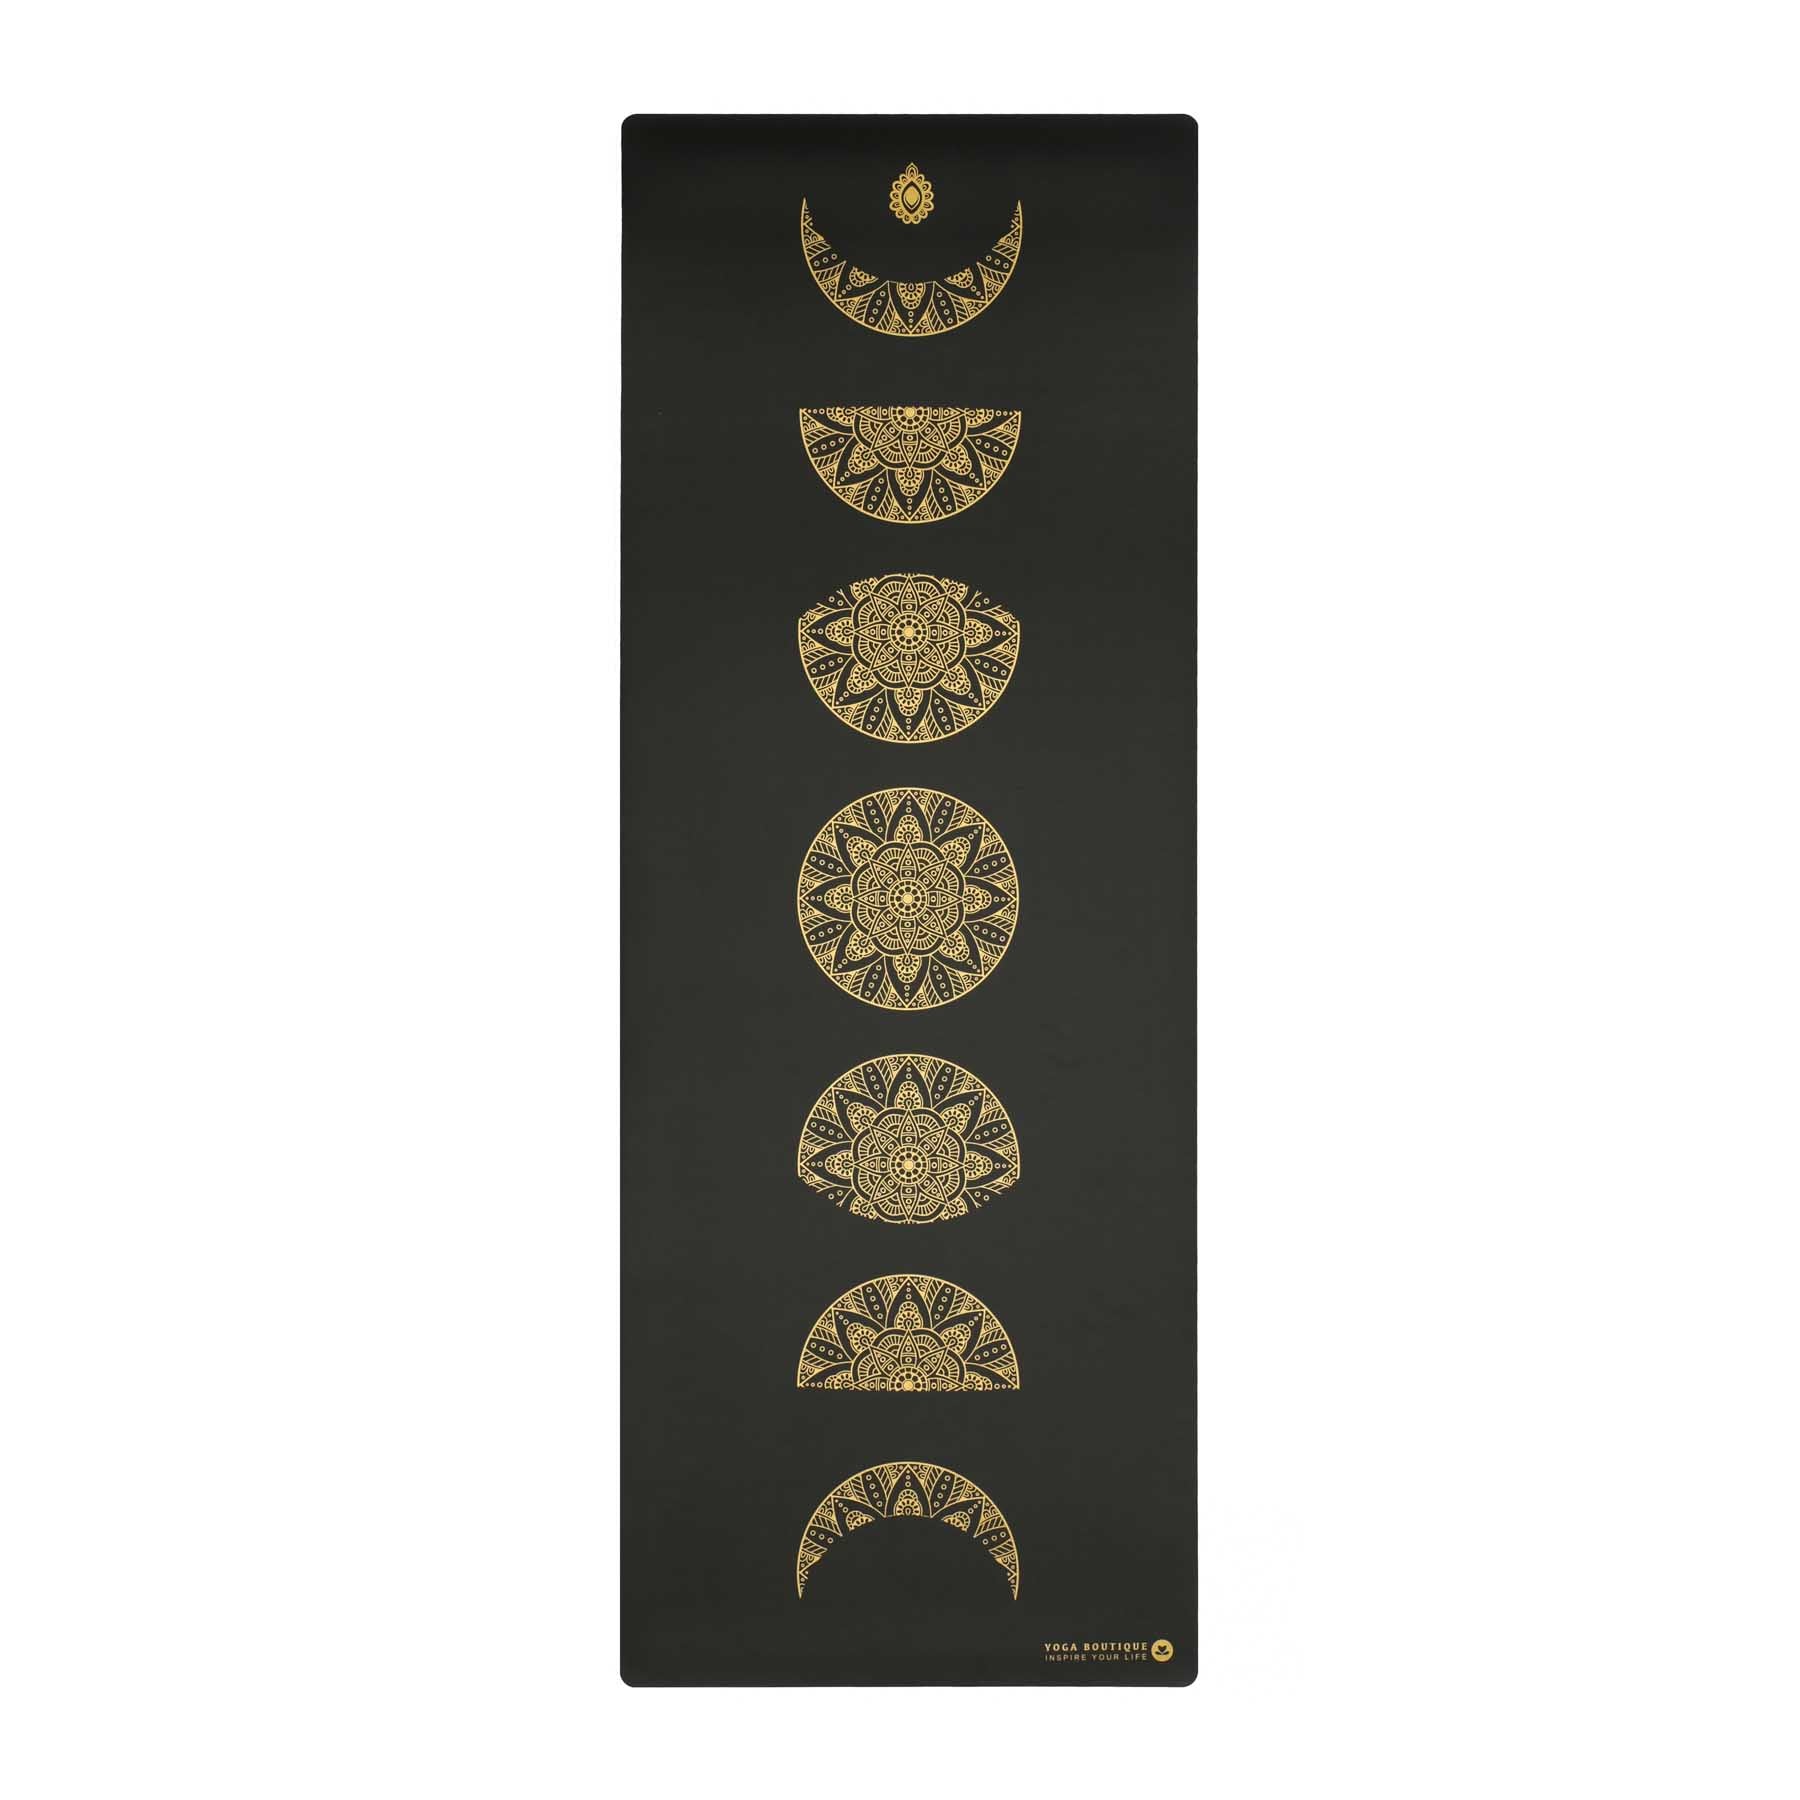 Tapis de yoga SuperGrip 2.0 Mandala Moon super antidérapant en caoutchouc naturel noir